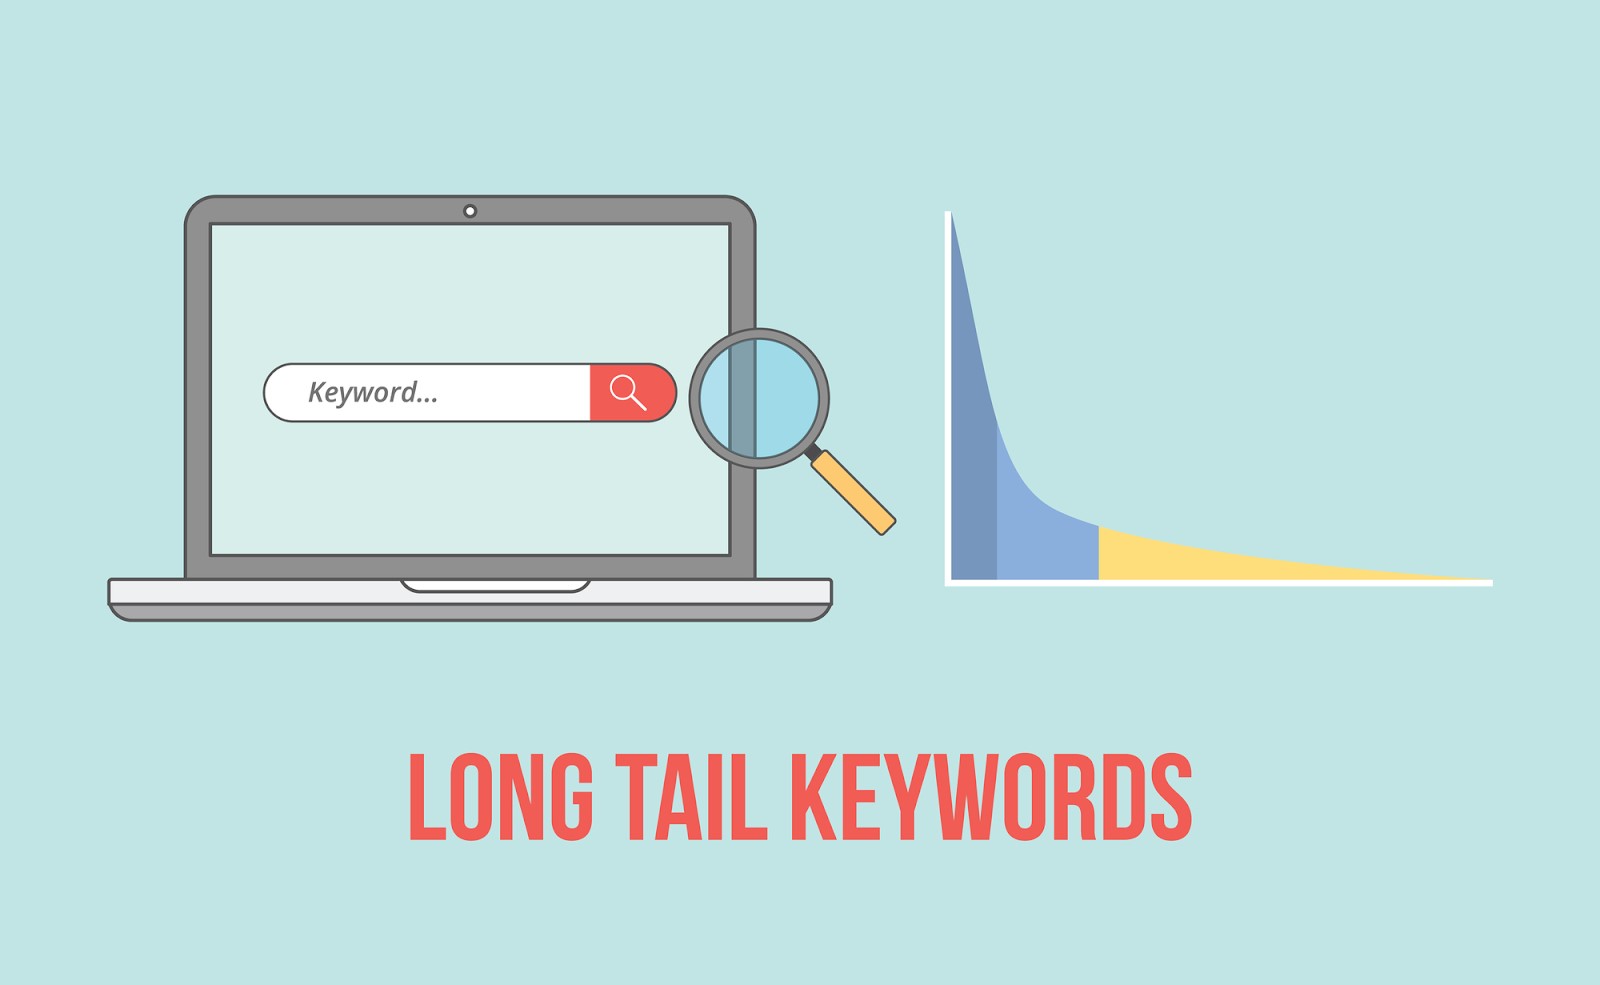 Amazon long tail keyword research image 4